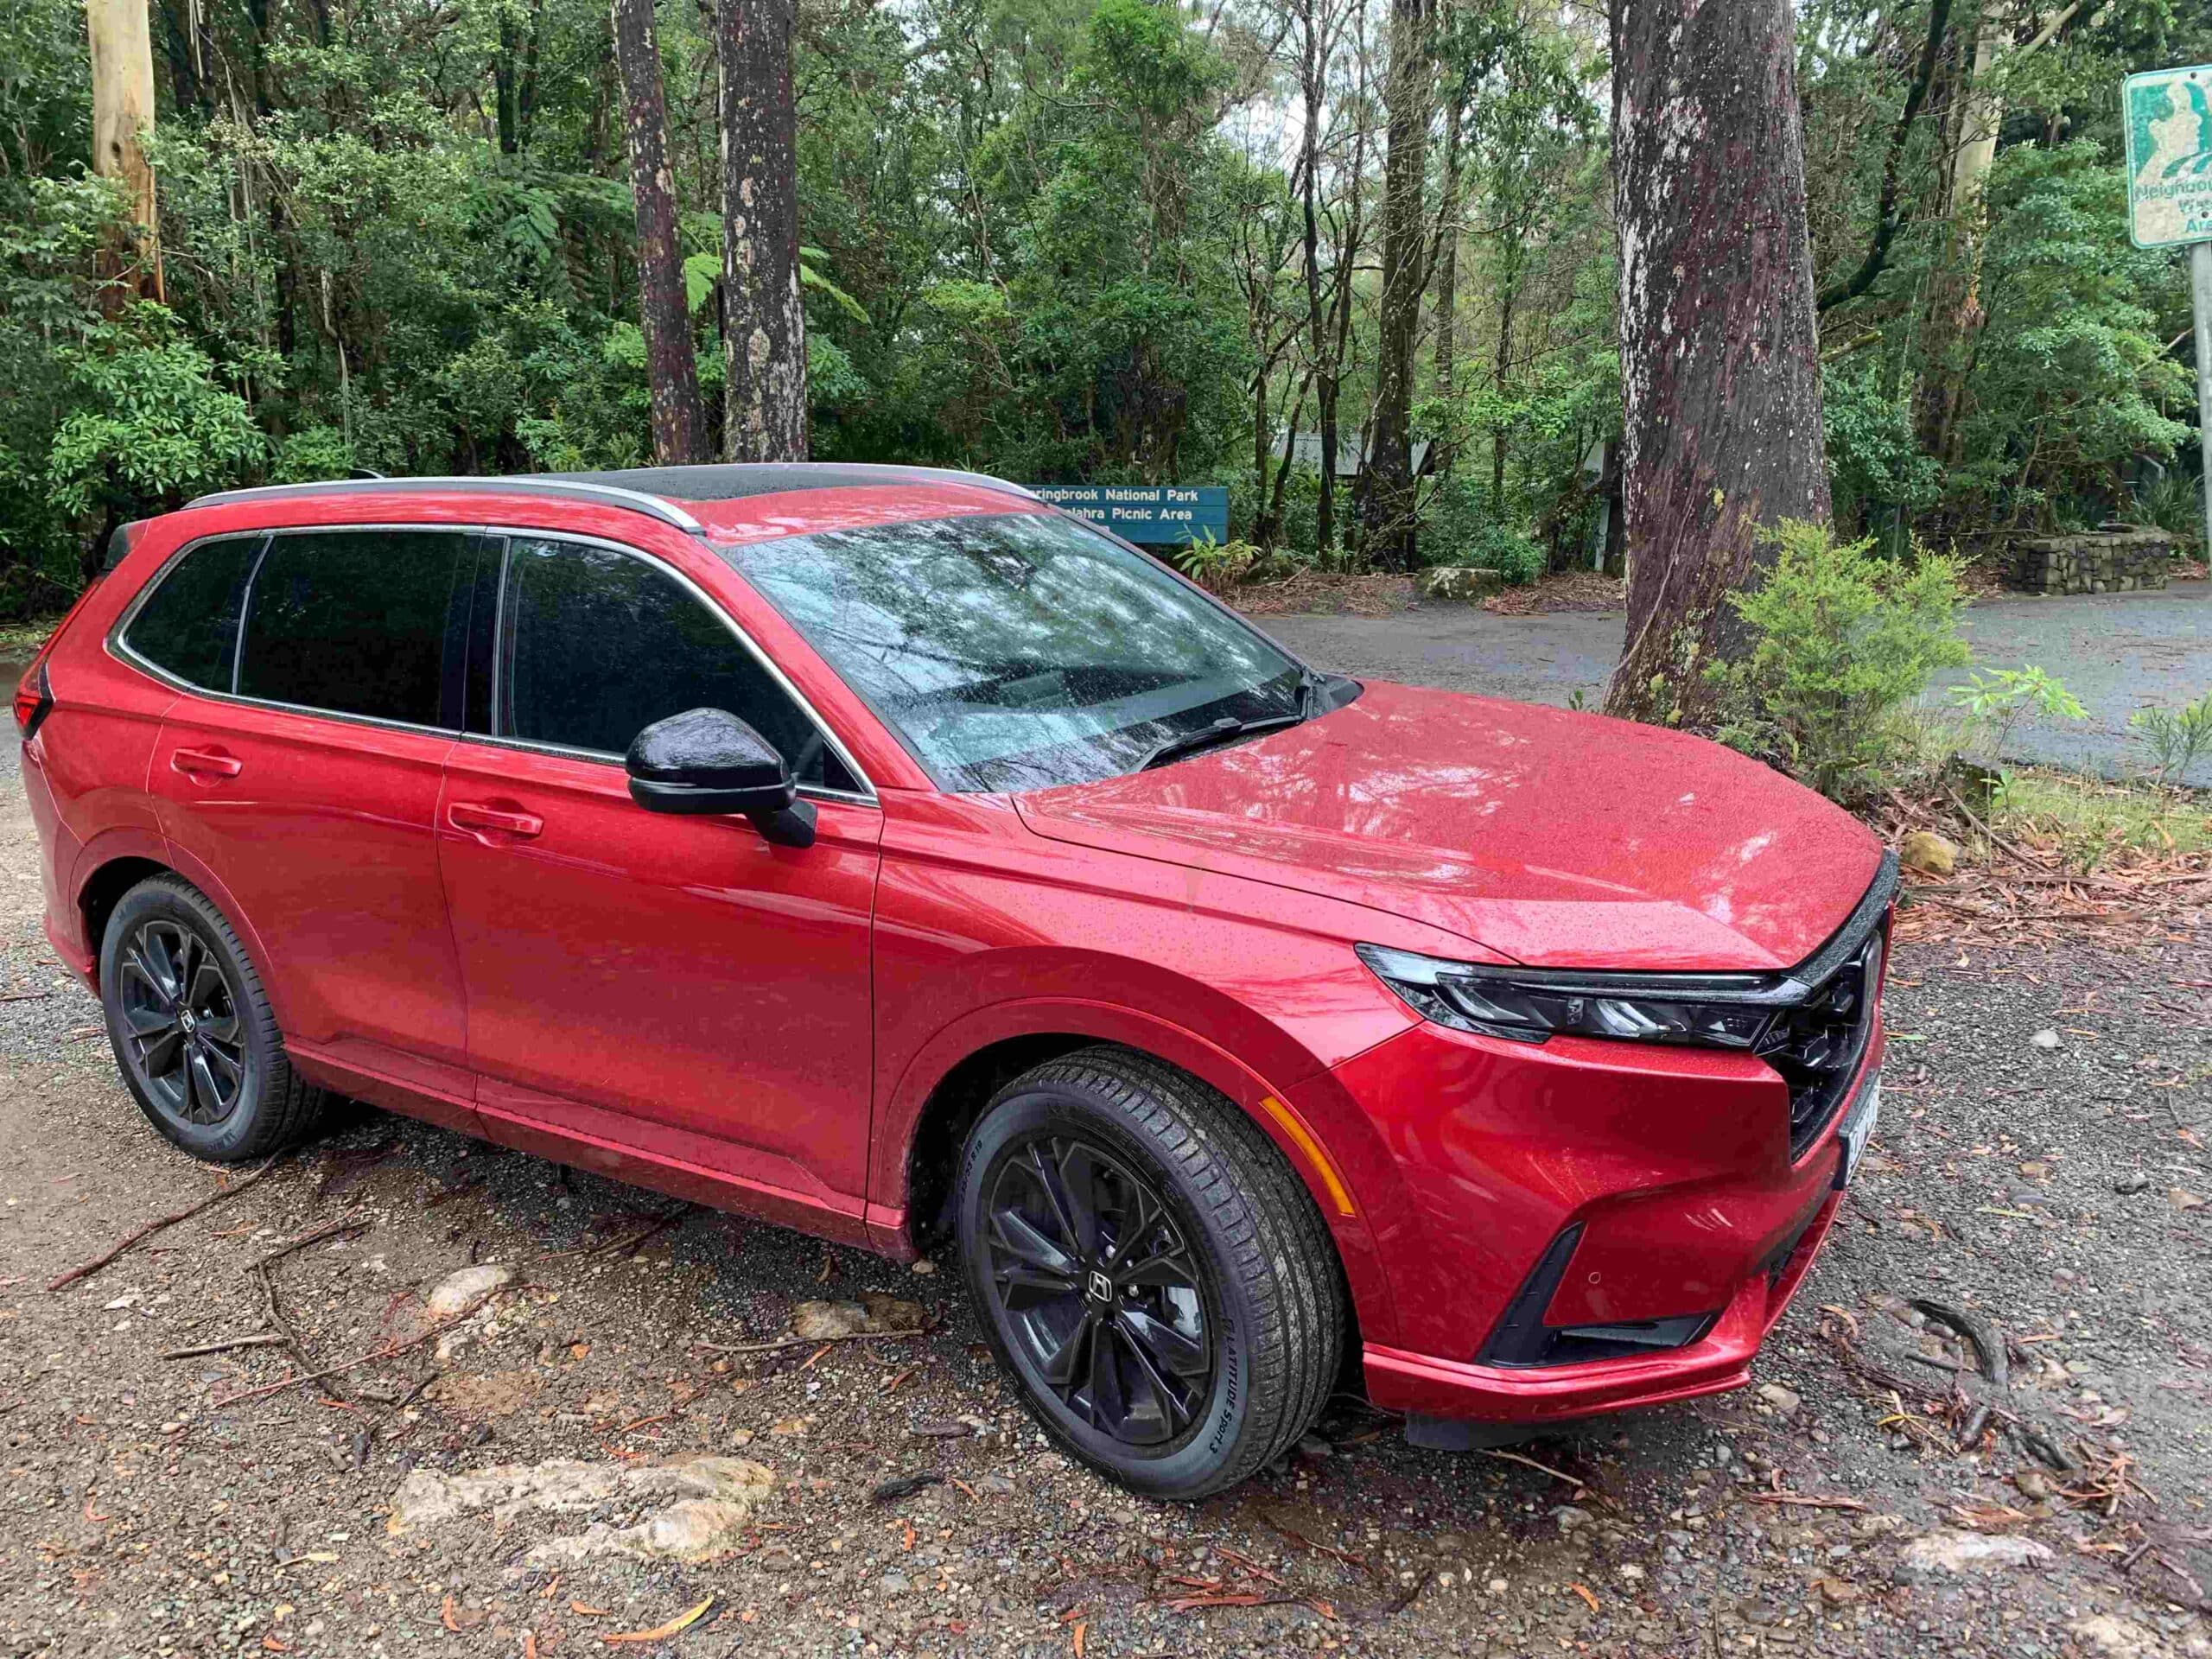 Honda CRV Erupts as Best MidRange SUV in Australia Wood Central